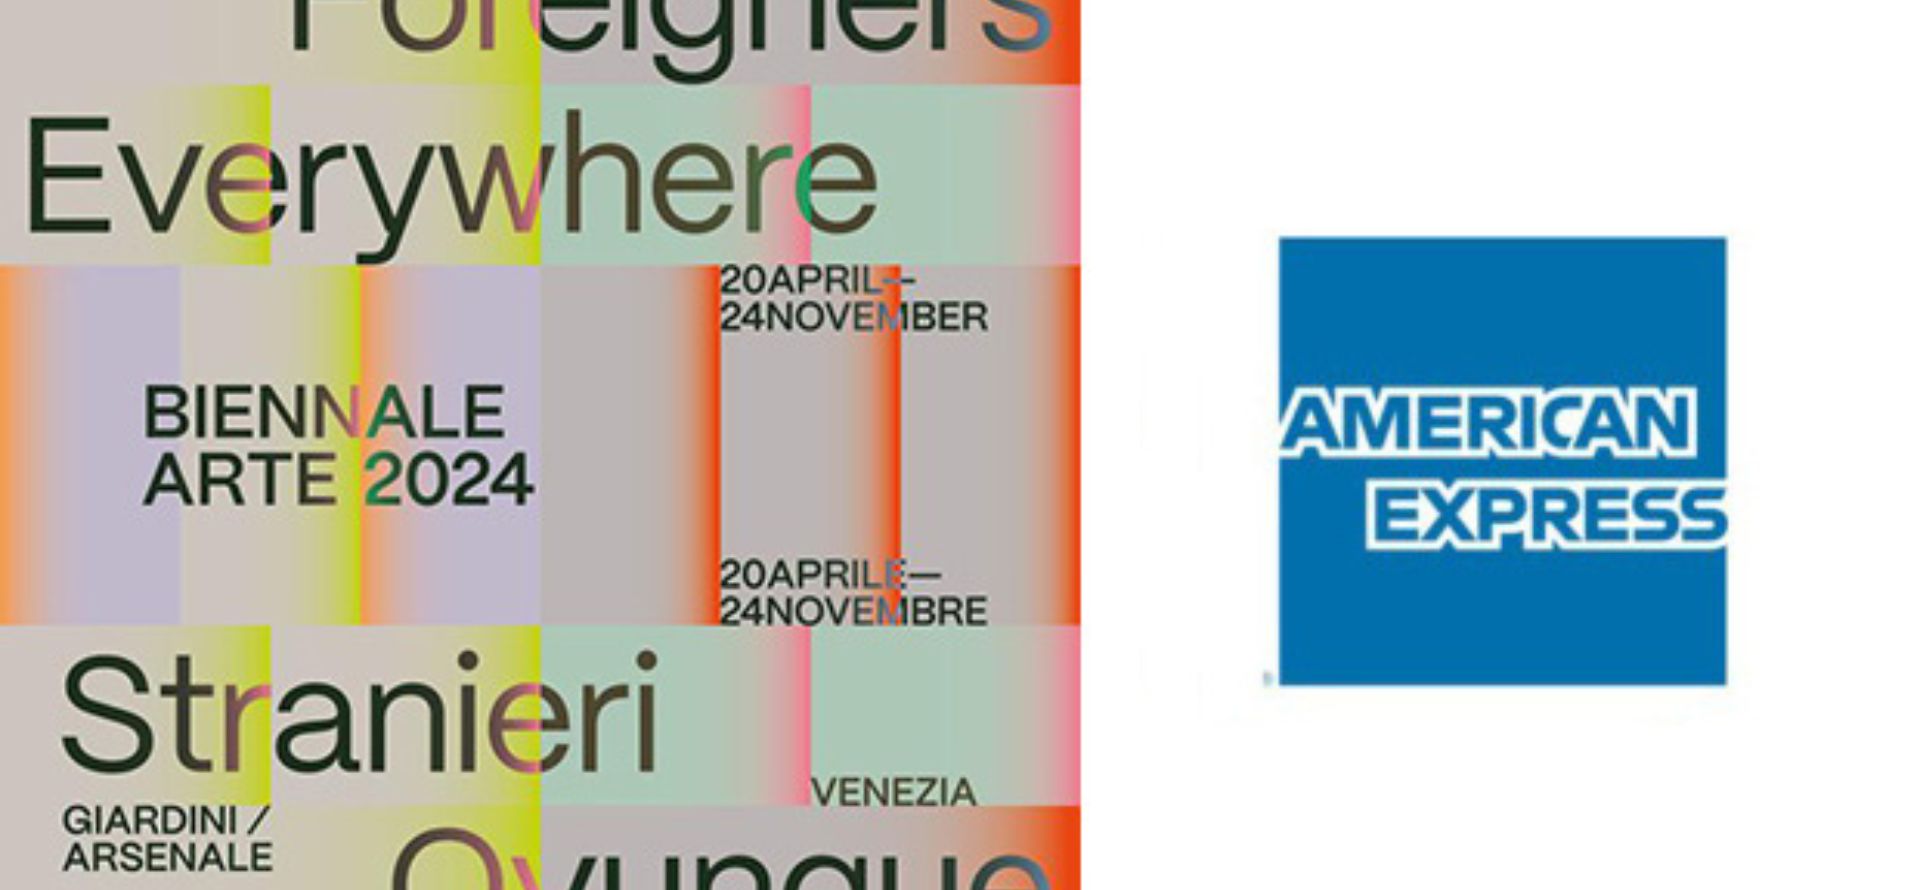 American Express sponsor ufficiale della Biennale d’Arte di Venezia 2024